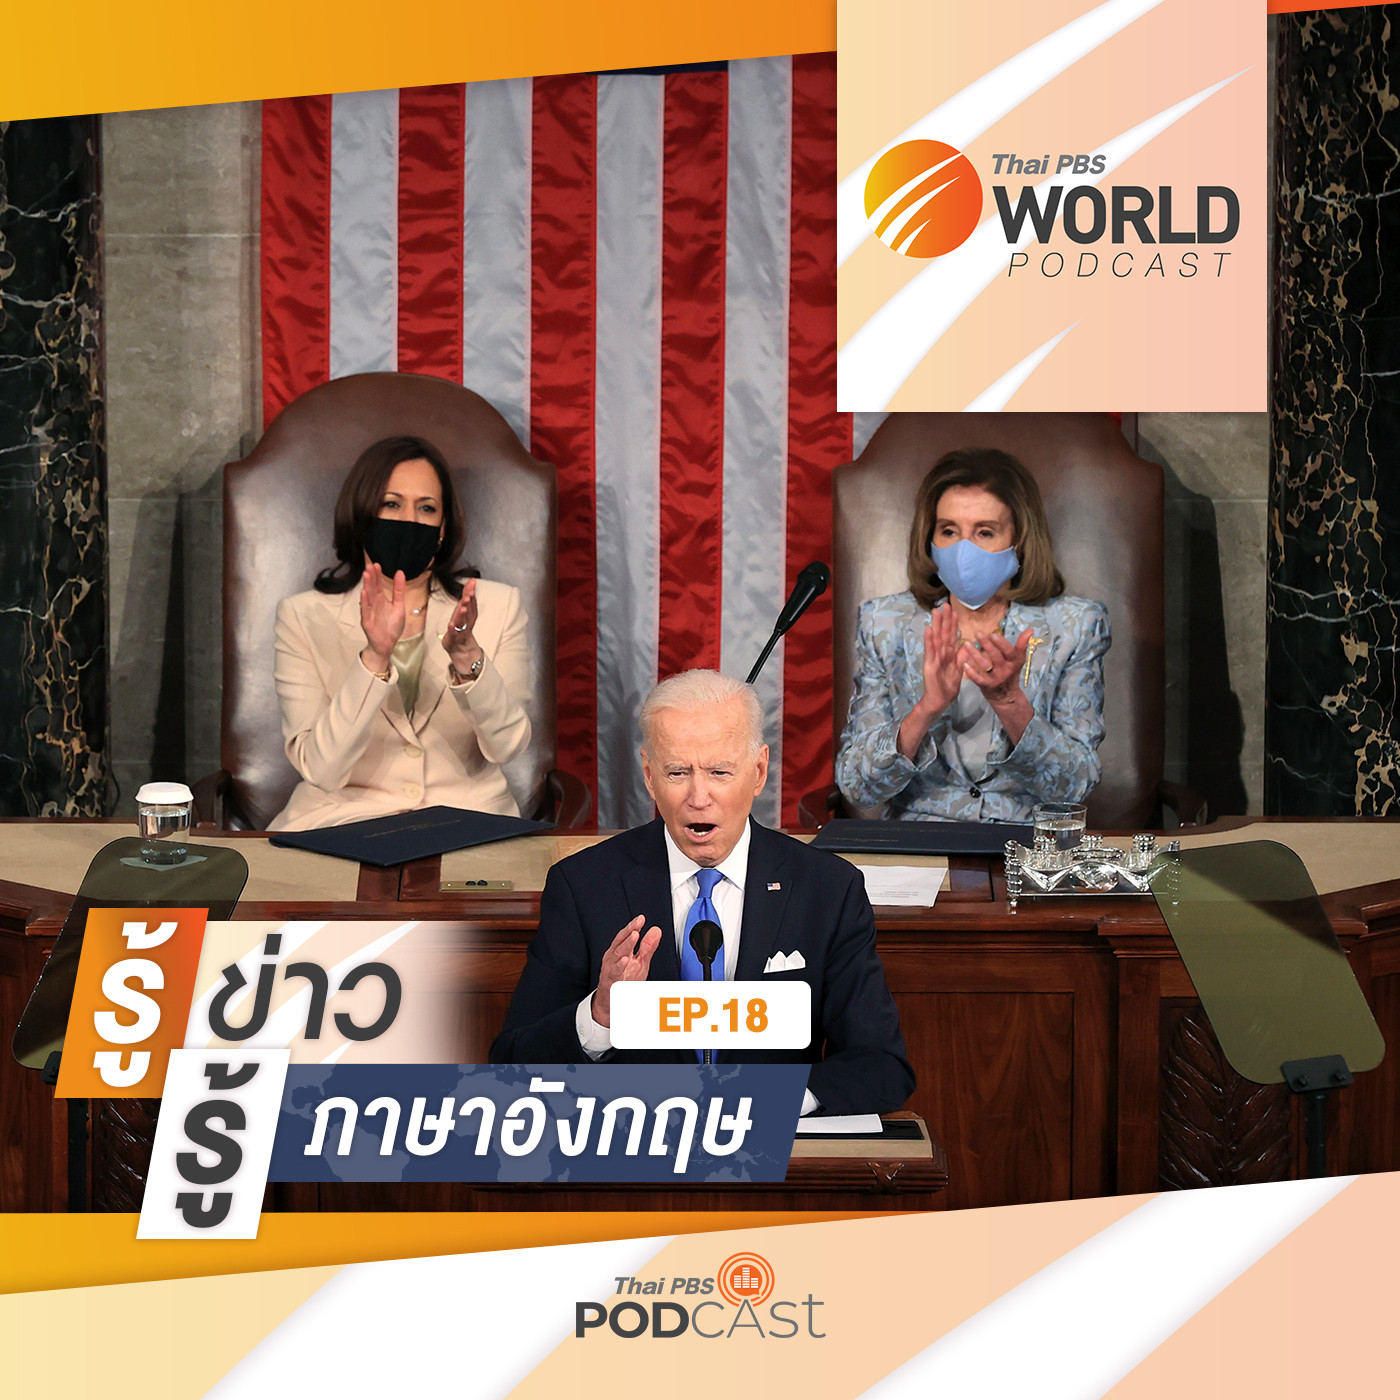 Thai PBS World Podcast - รู้ข่าว รู้ภาษาอังกฤษ EP. 18: รู้ข่าว รู้ภาษาอังกฤษ - วาทศิลป์ของ 